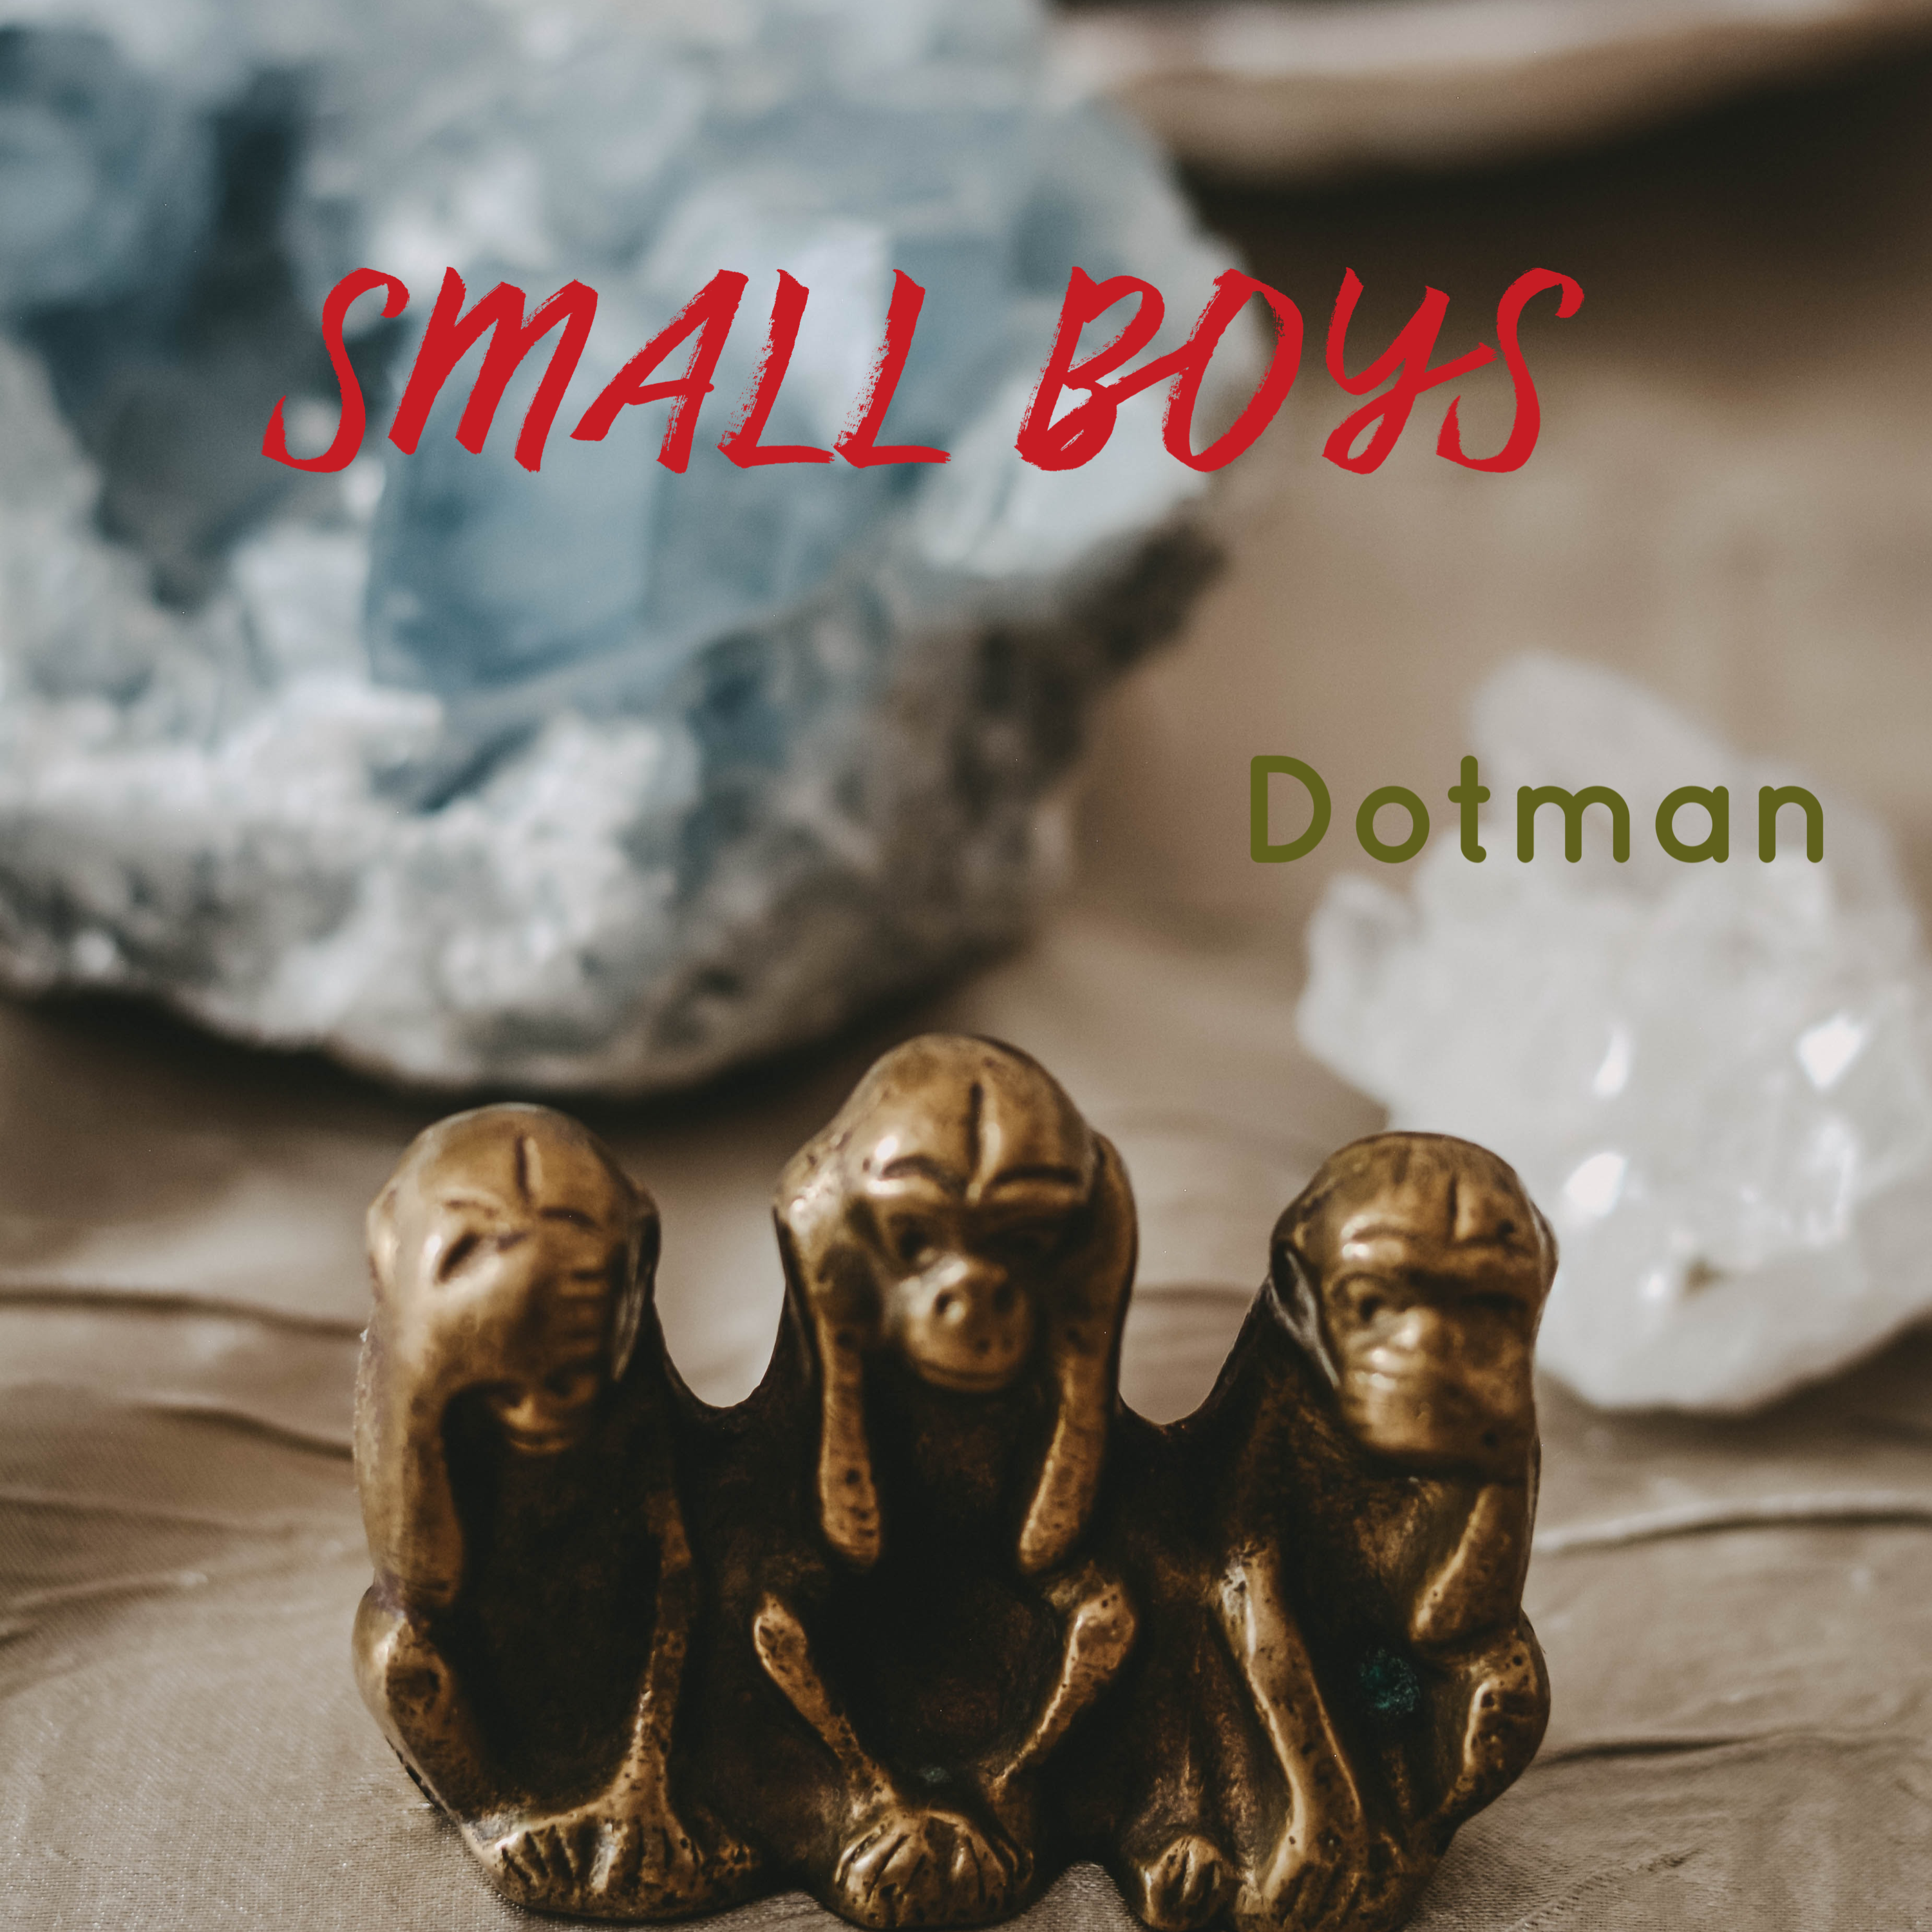 Dotman - Small boys